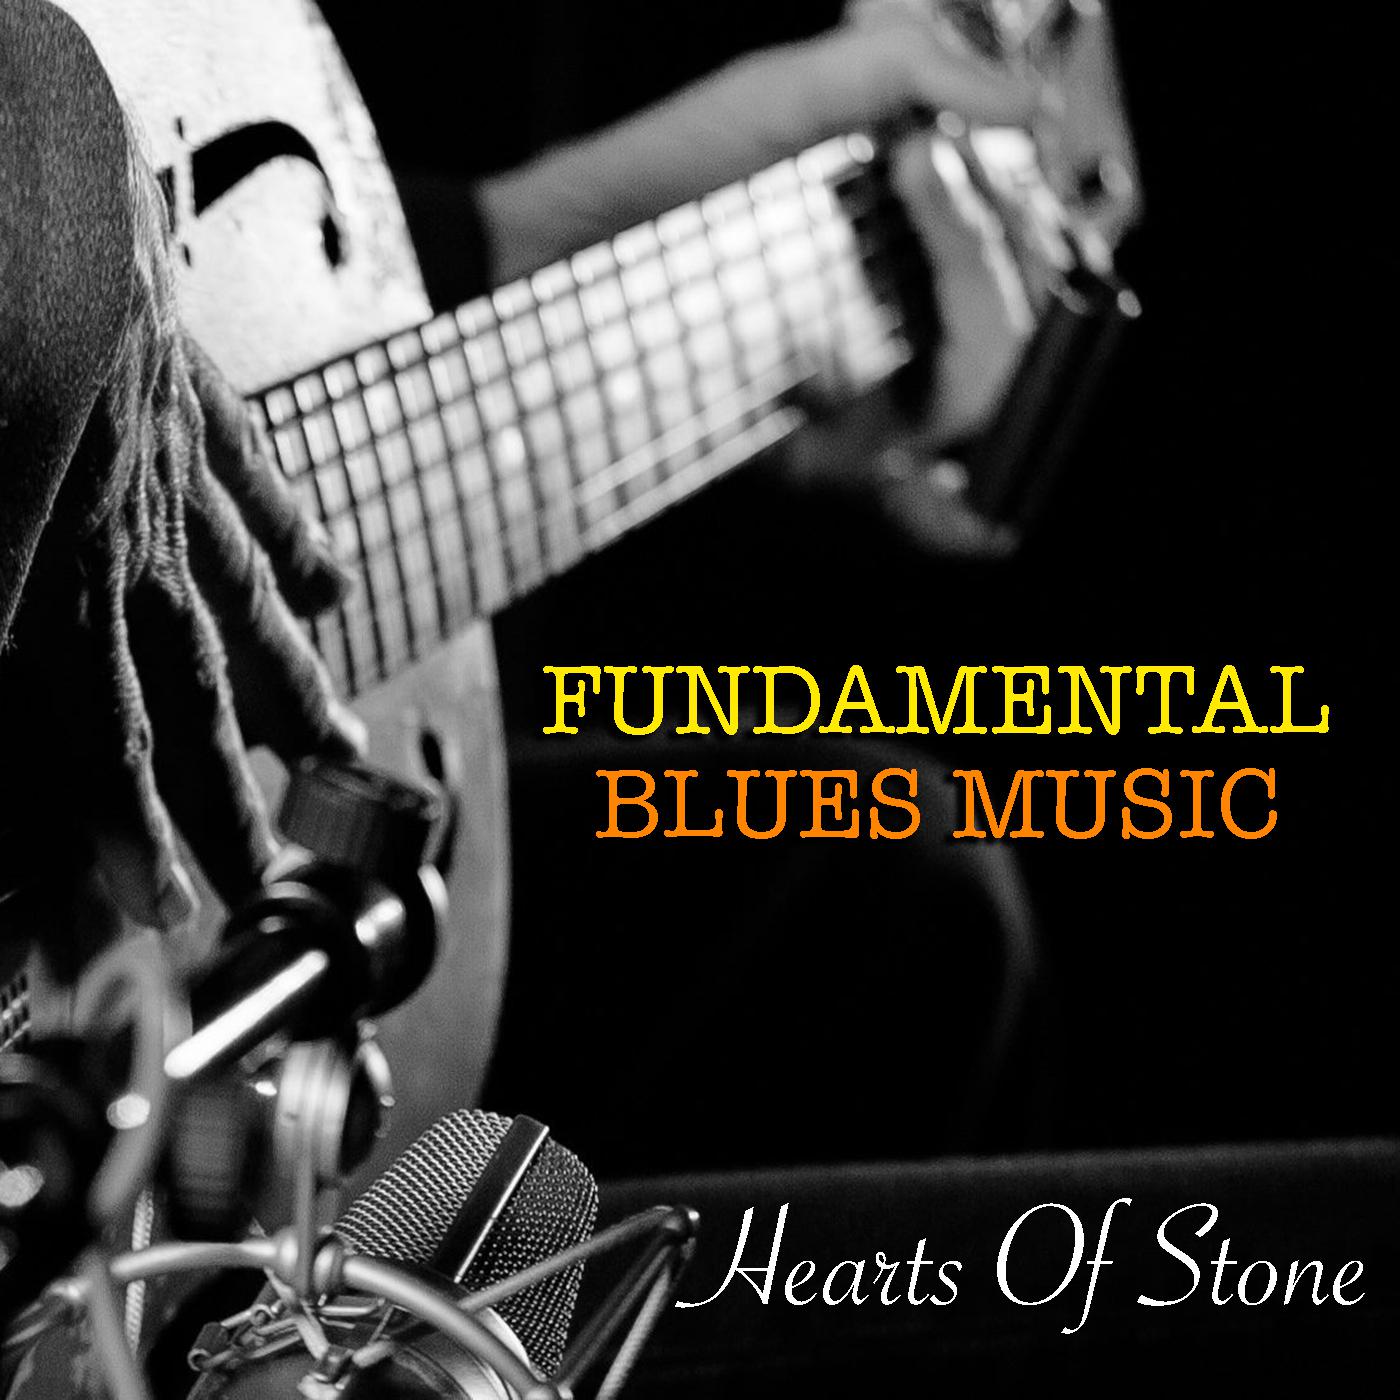 Hearts Of Stones Fundamental Blues Music